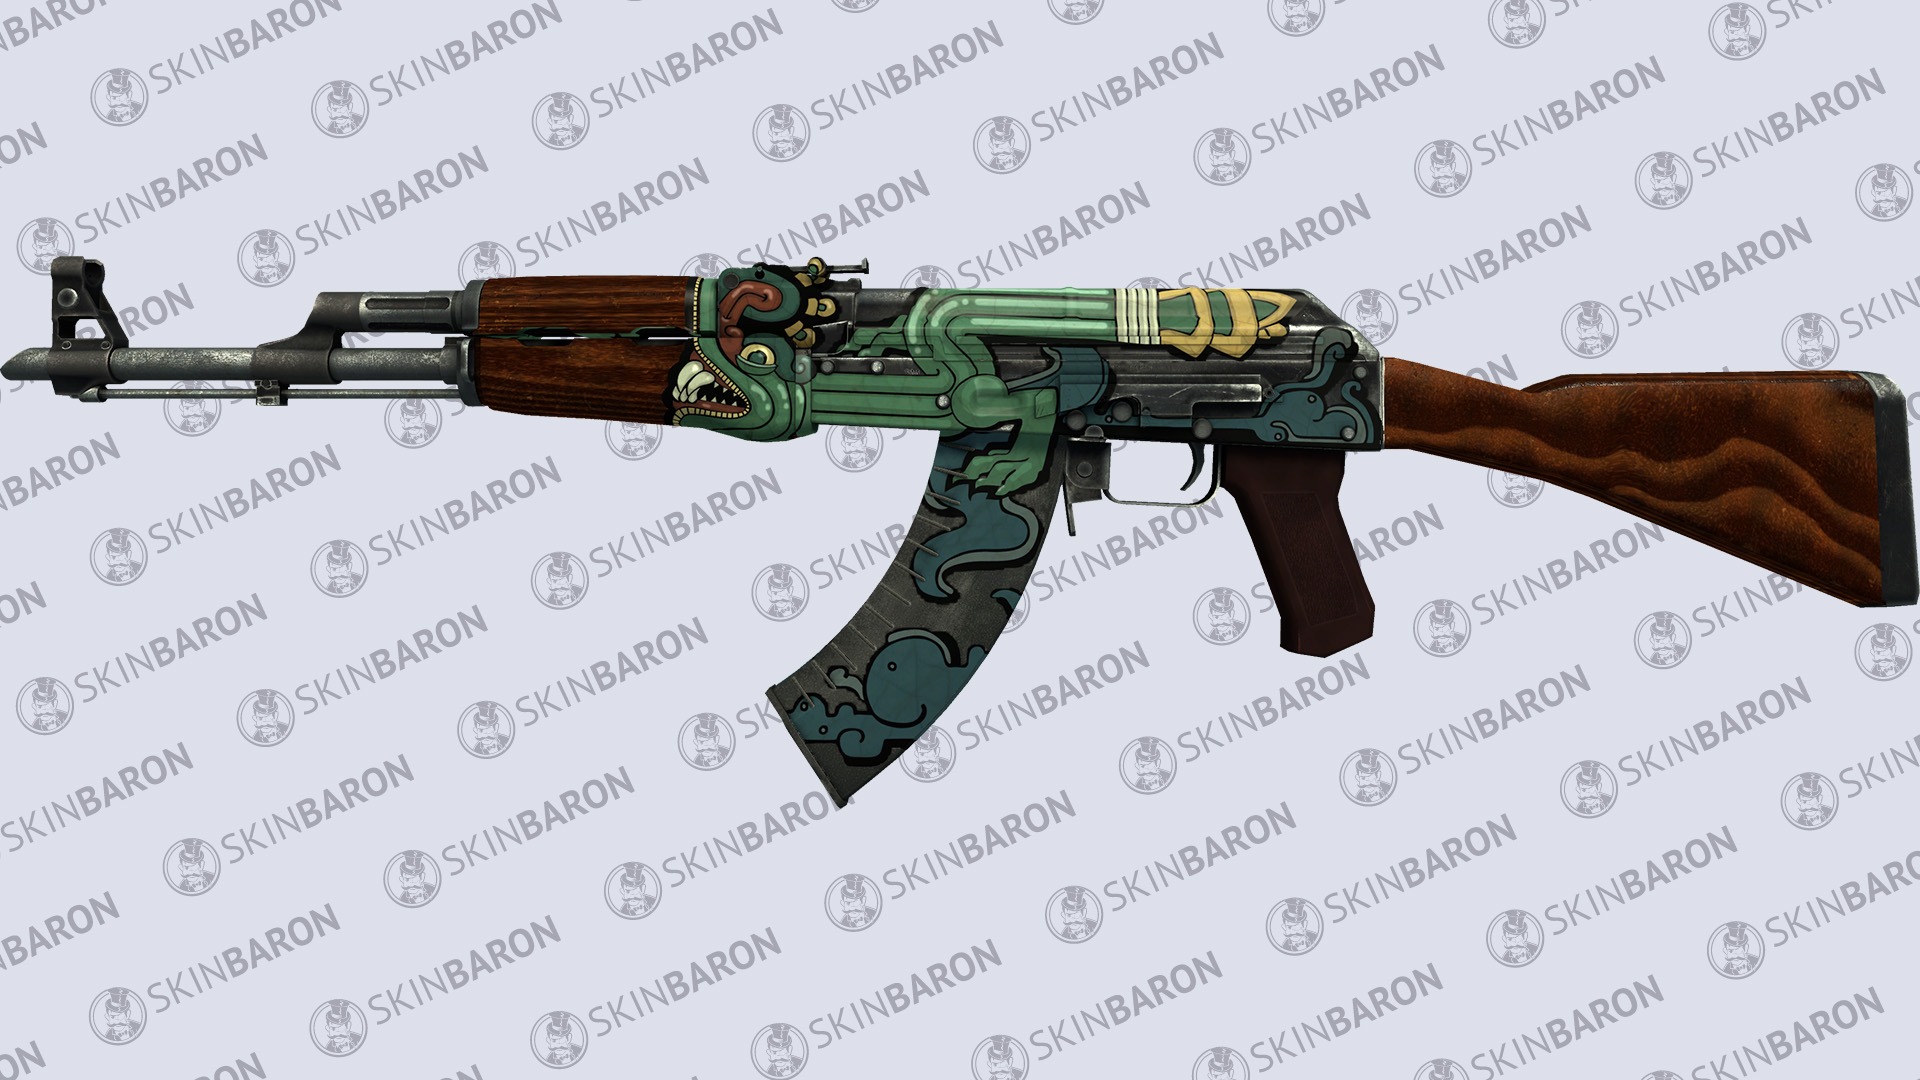 AK-47 Fire Serpent - Most Expensive AK-47 skins